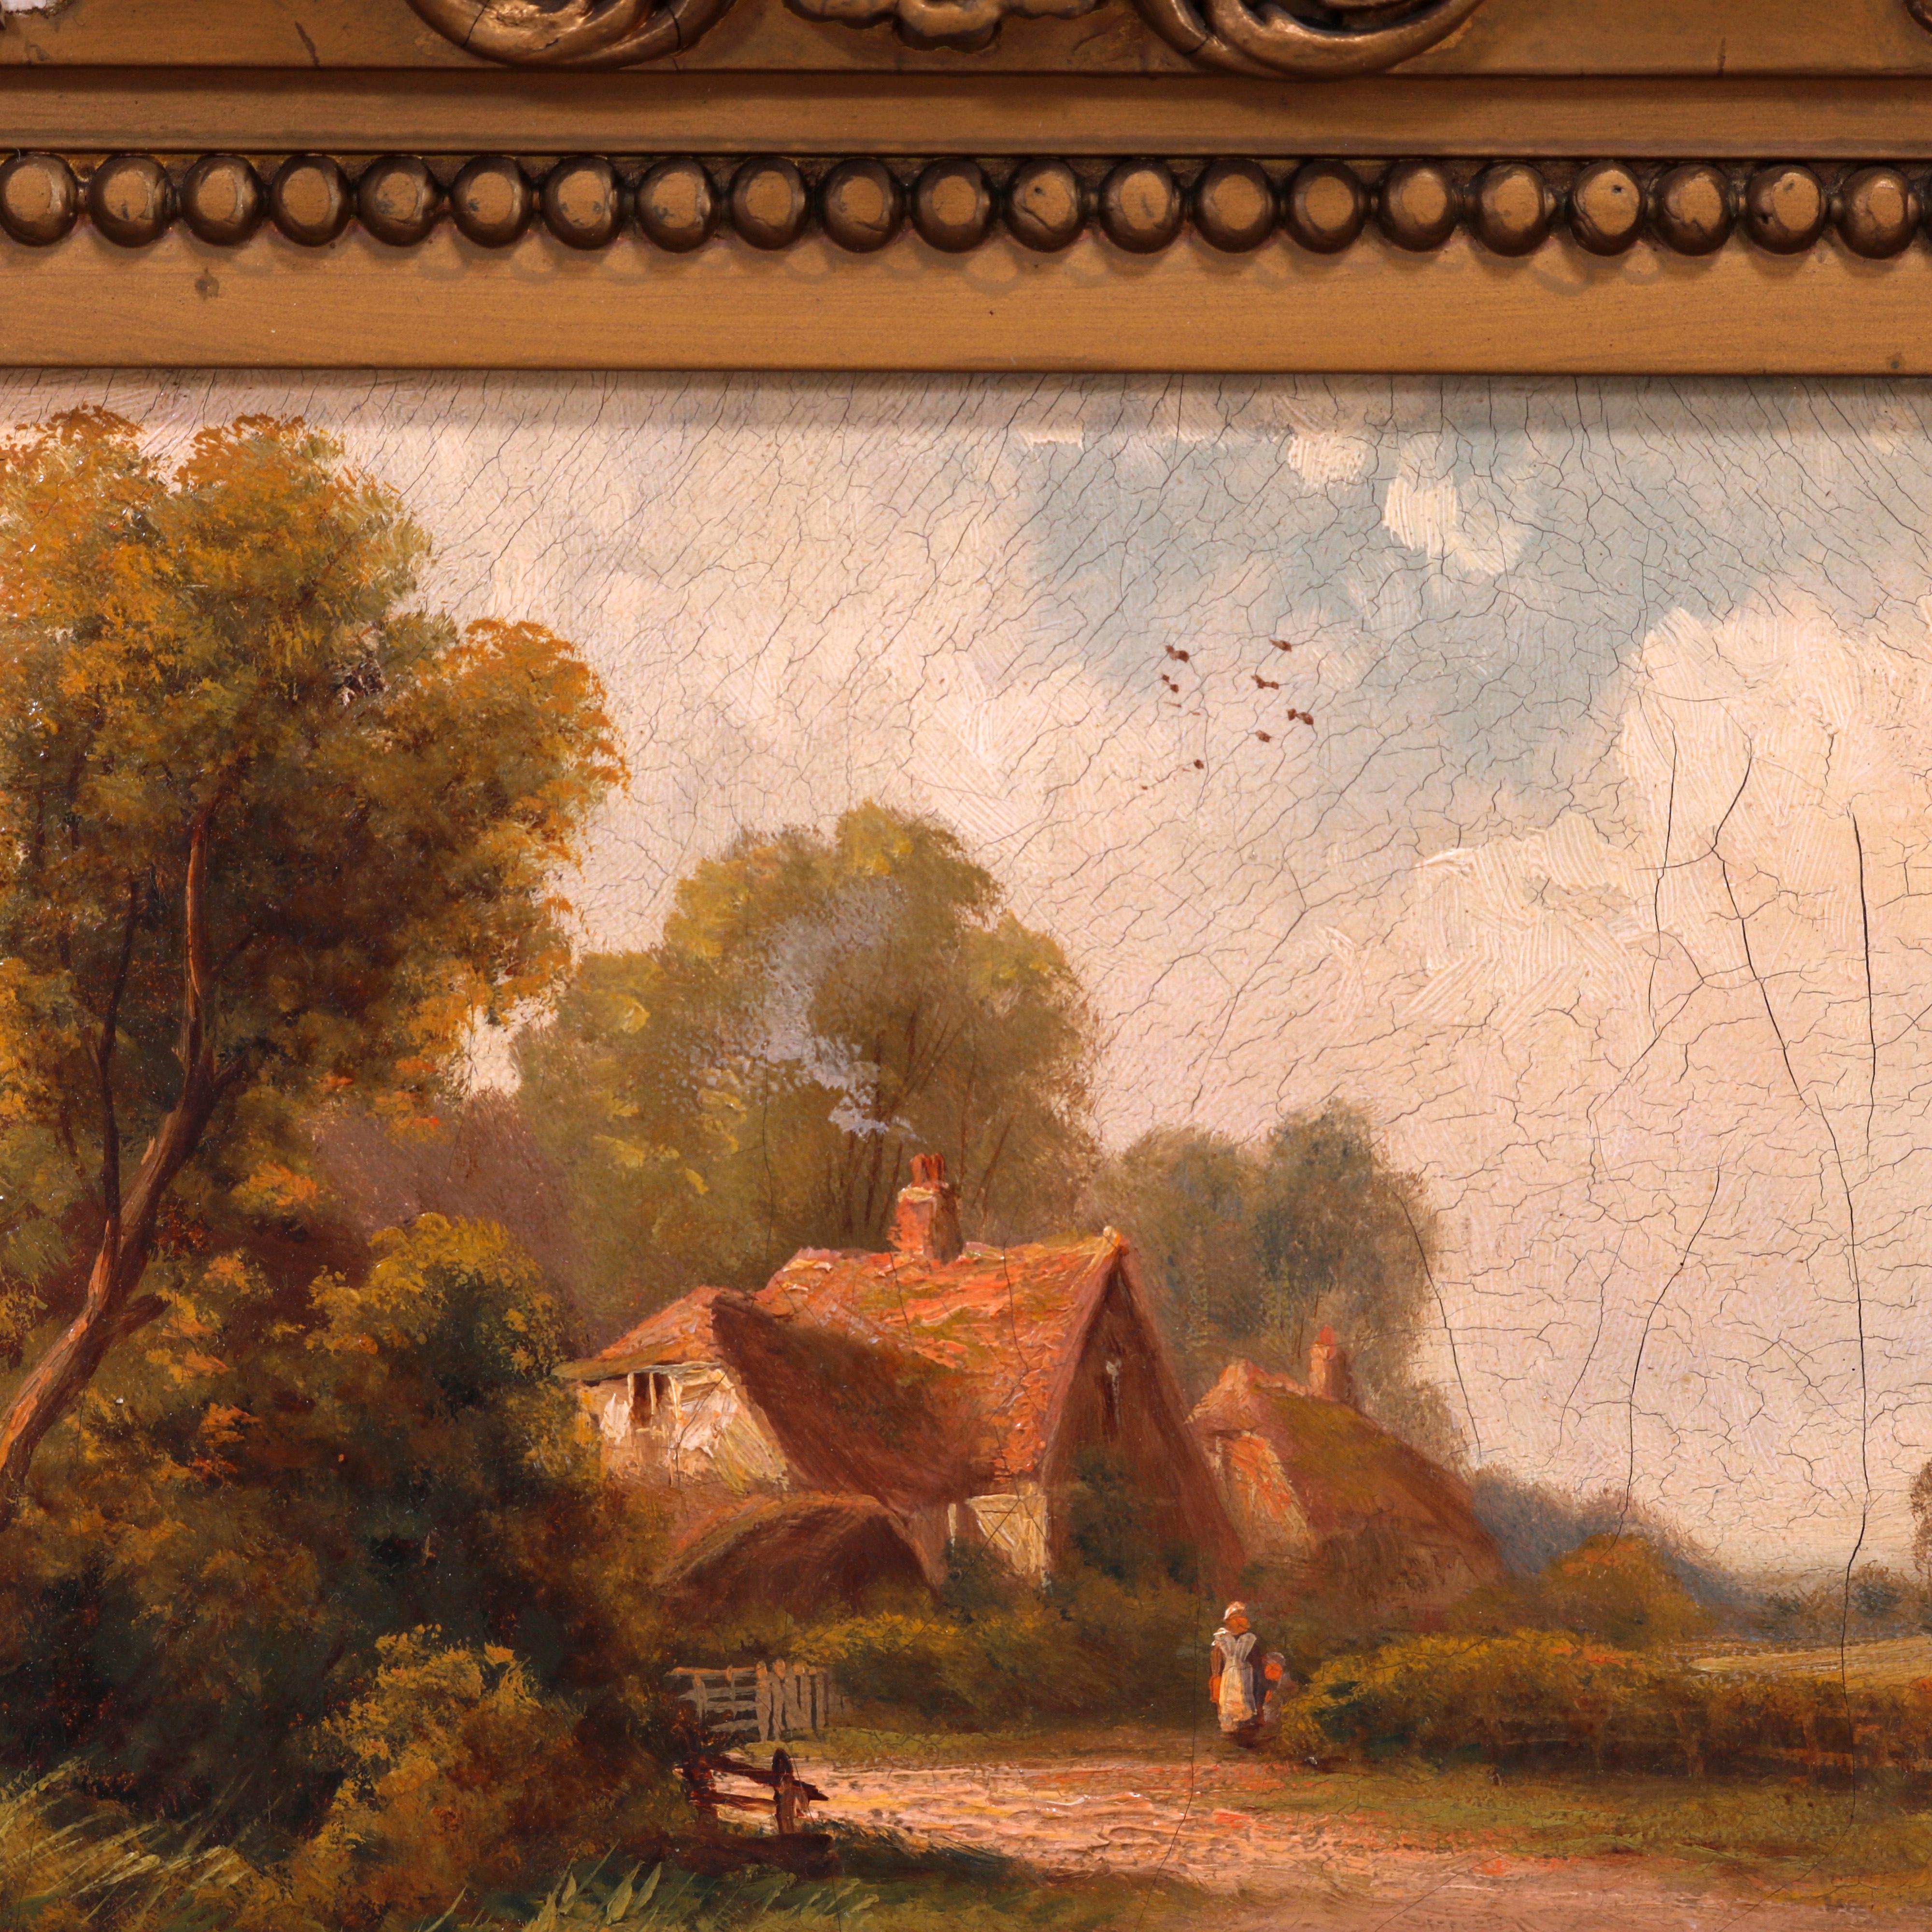 European Antique English Cottage Landscape Painting with Figure, Signed R. Fenton, 1906